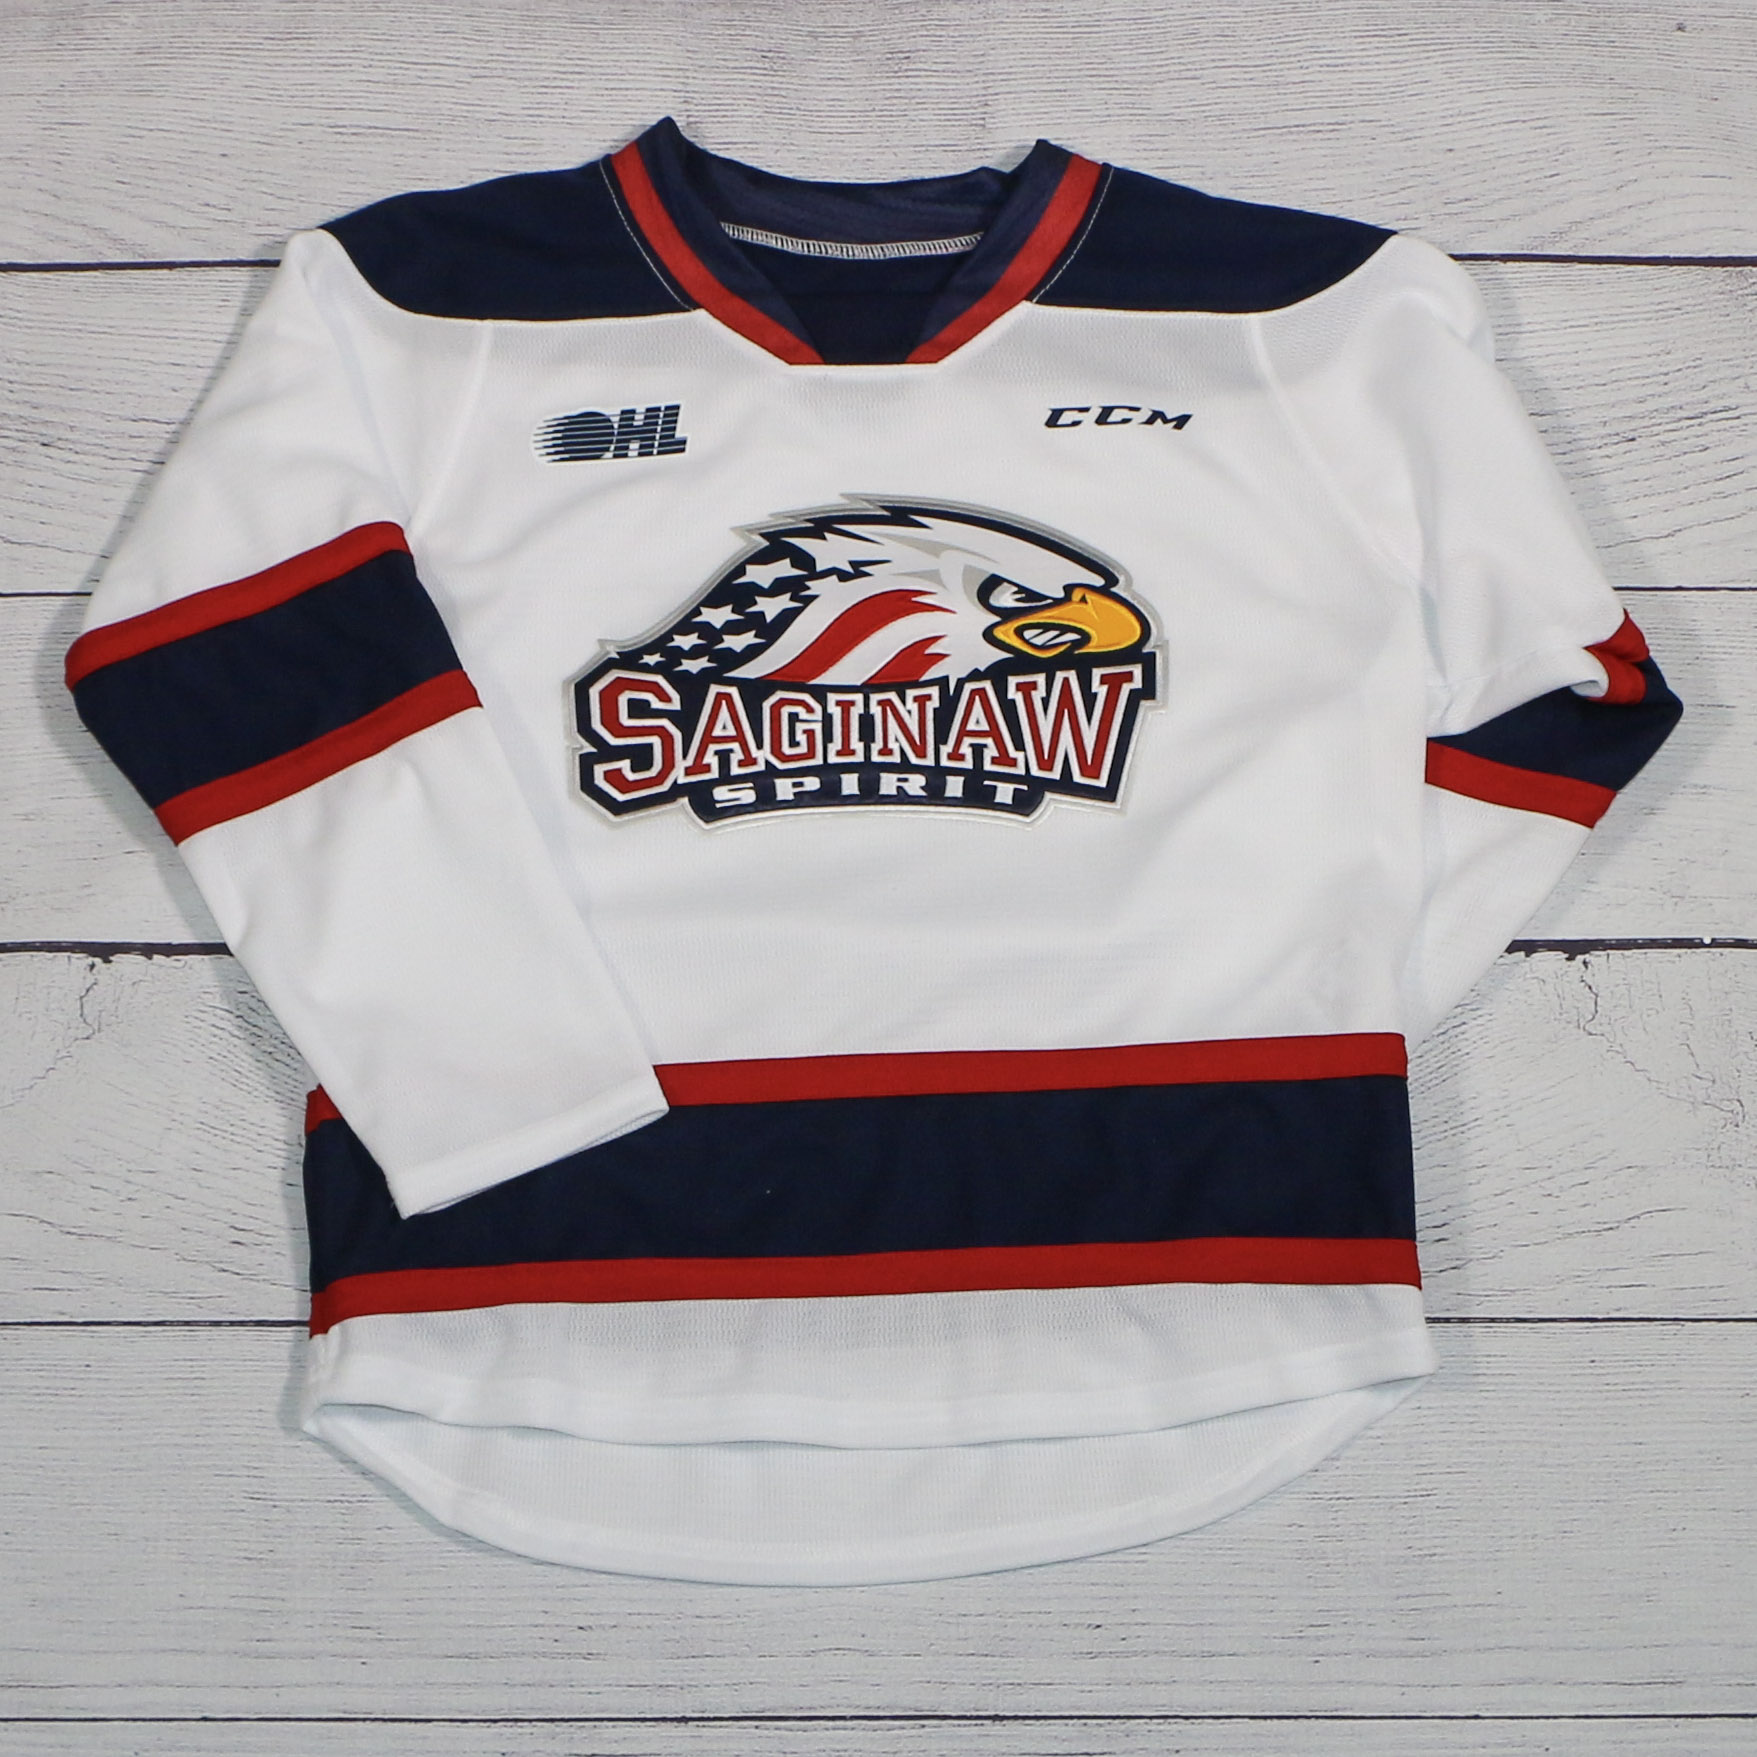 Saginaw Spirit of the OHL. Jerseys made by Projoy Sportswear & Apparel.